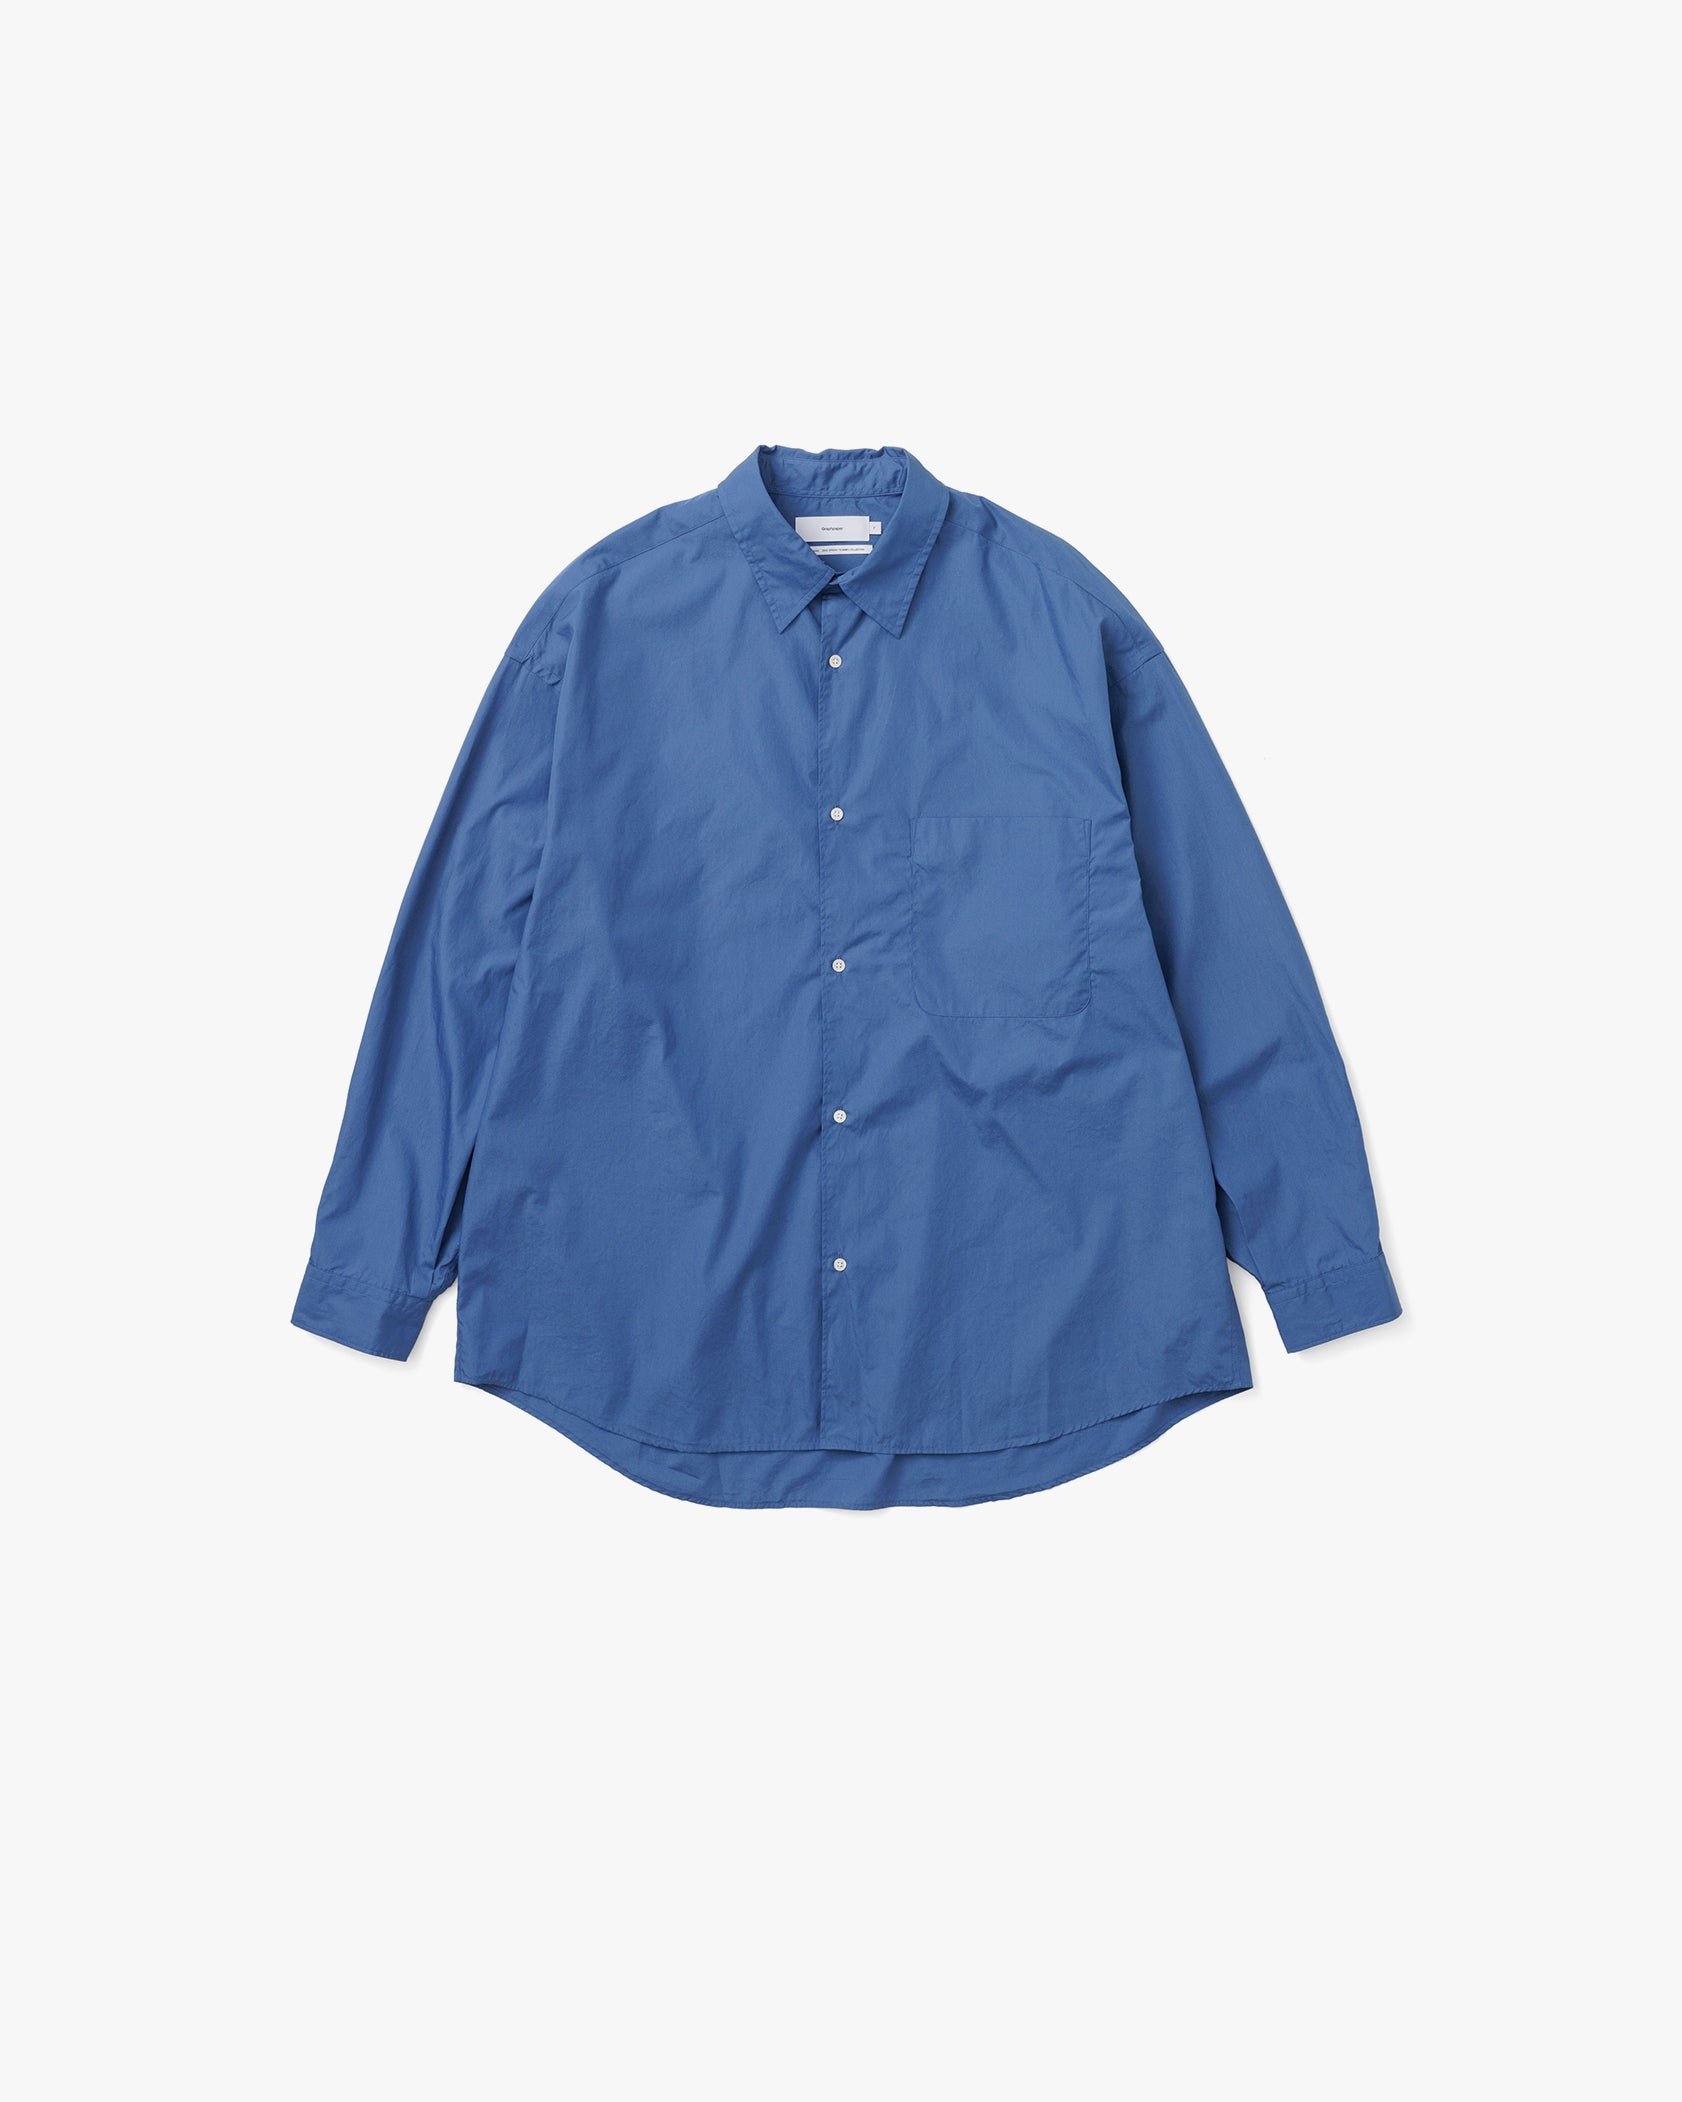 Broad L/S Oversized Regular Collar Shirt style.2021.1.17. | 1509 